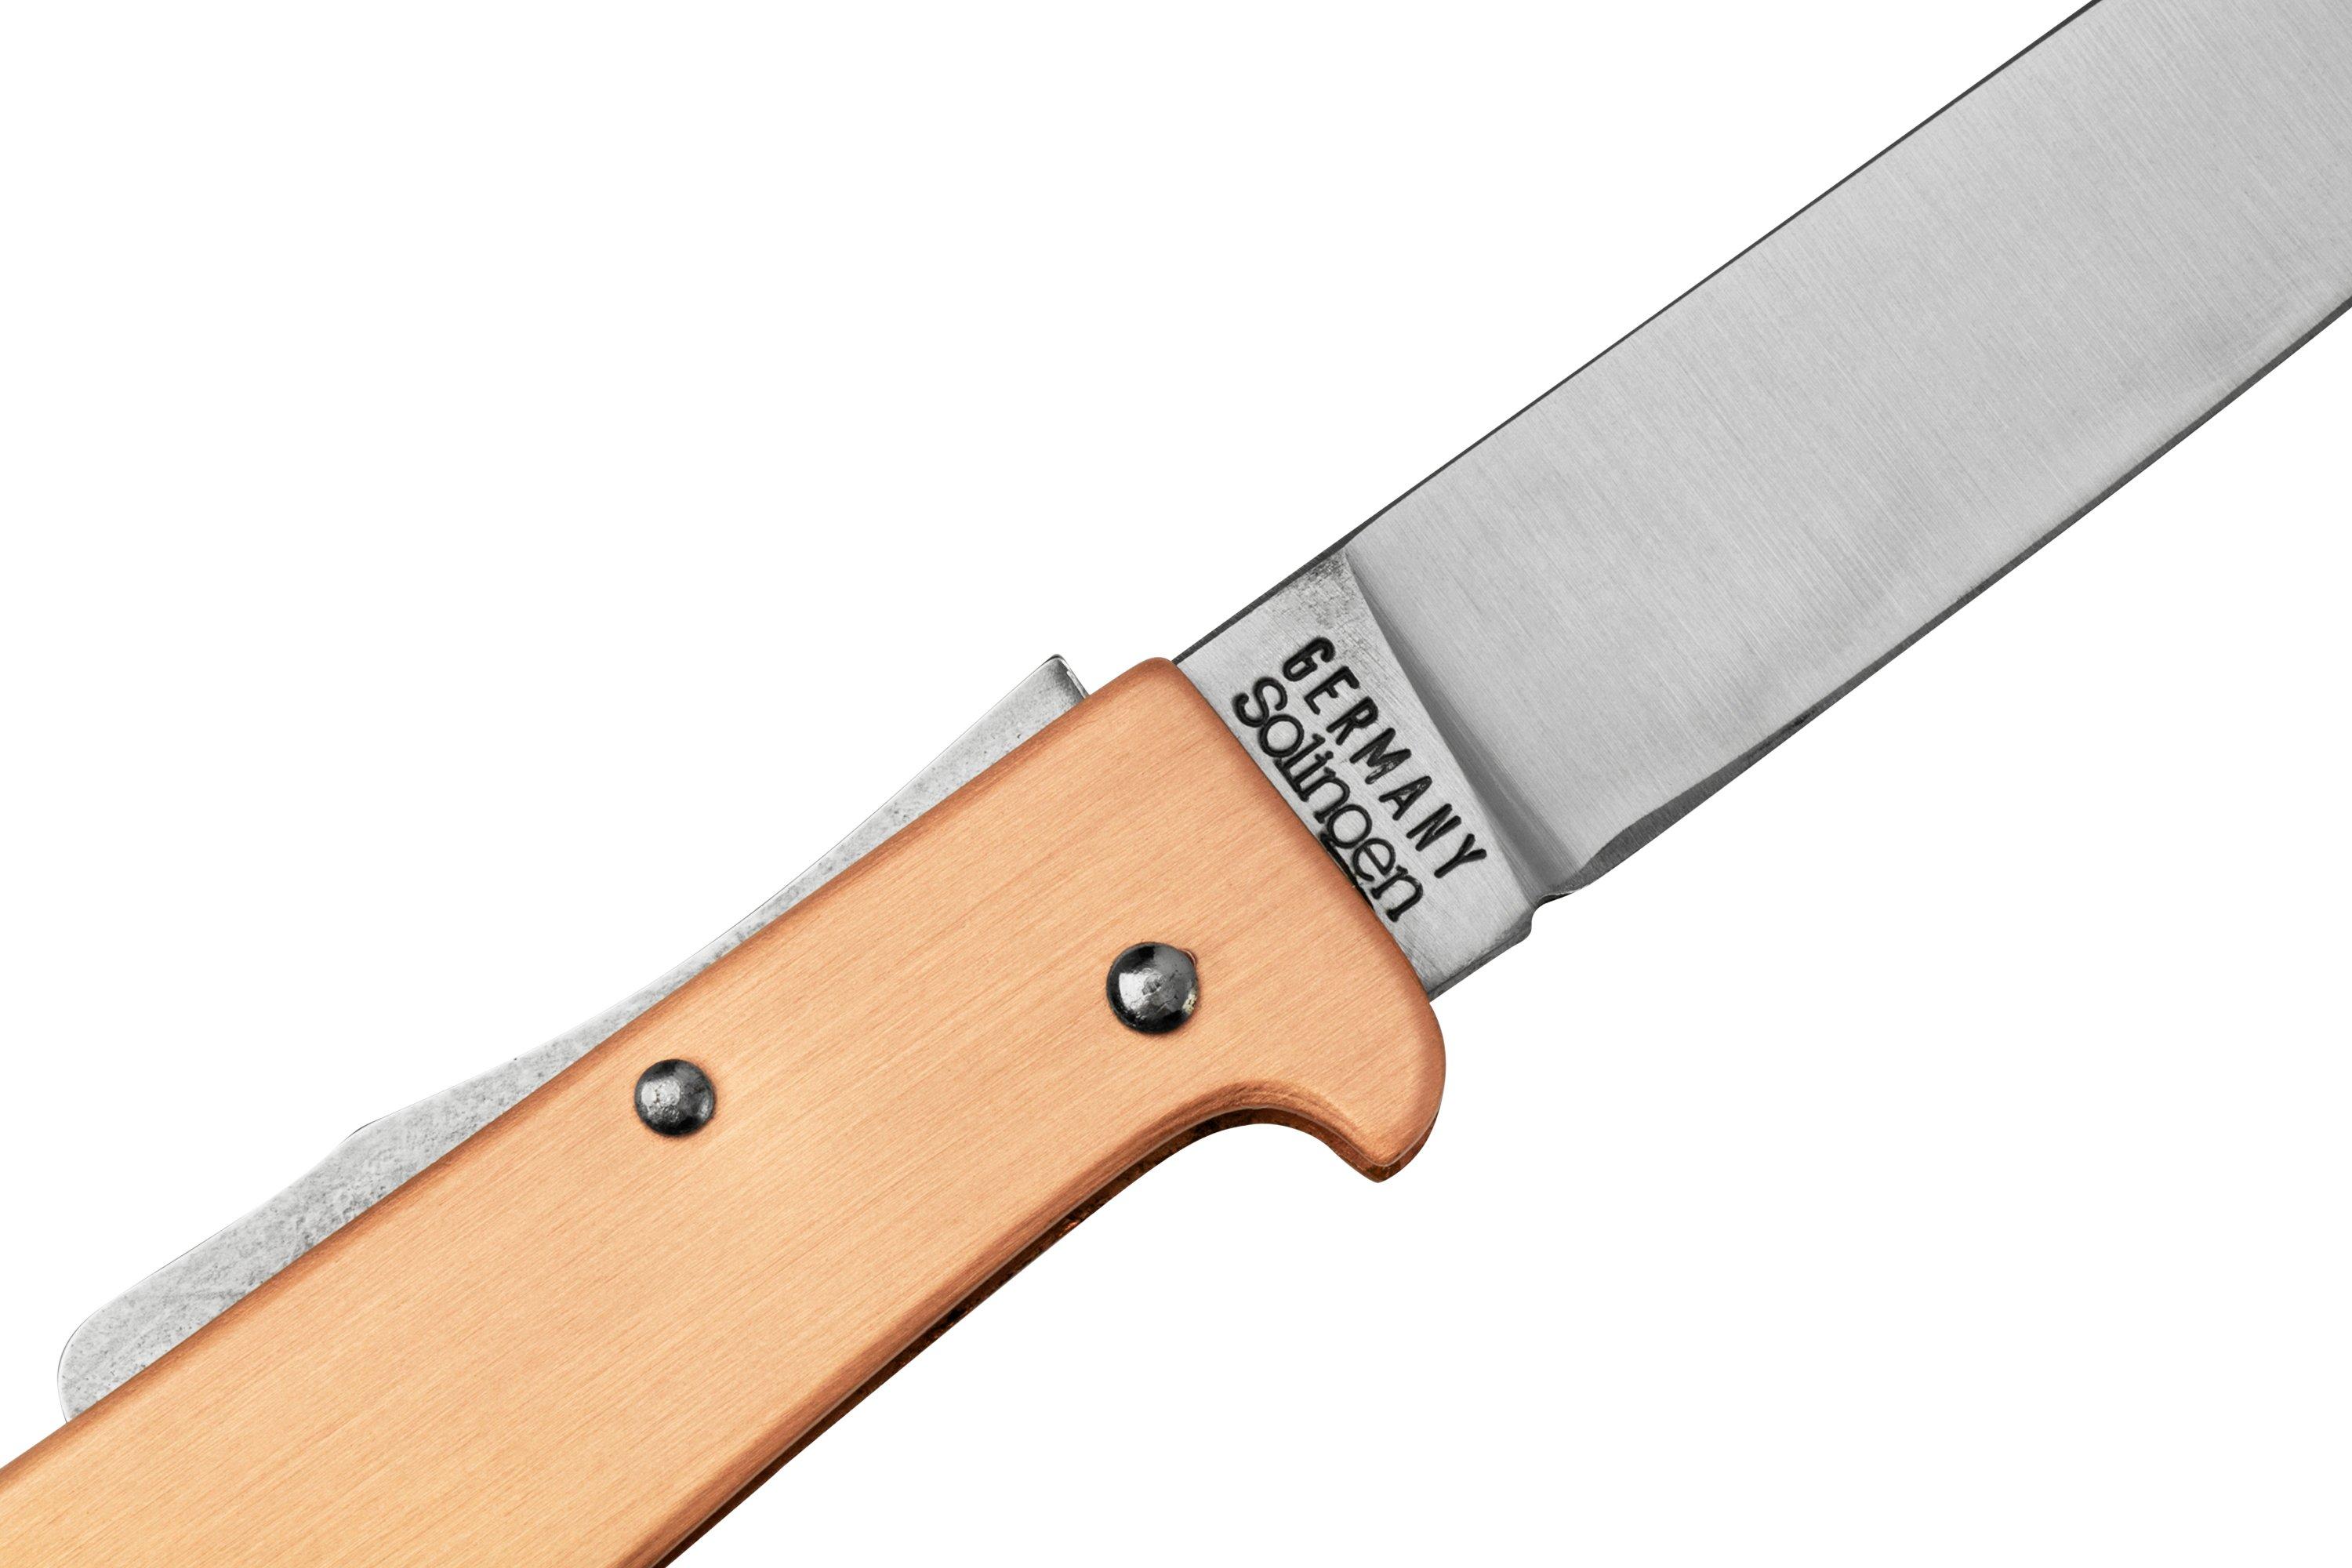 Otter Messer Copper Clip Mercator Knife, Carbon Steel, Coppe